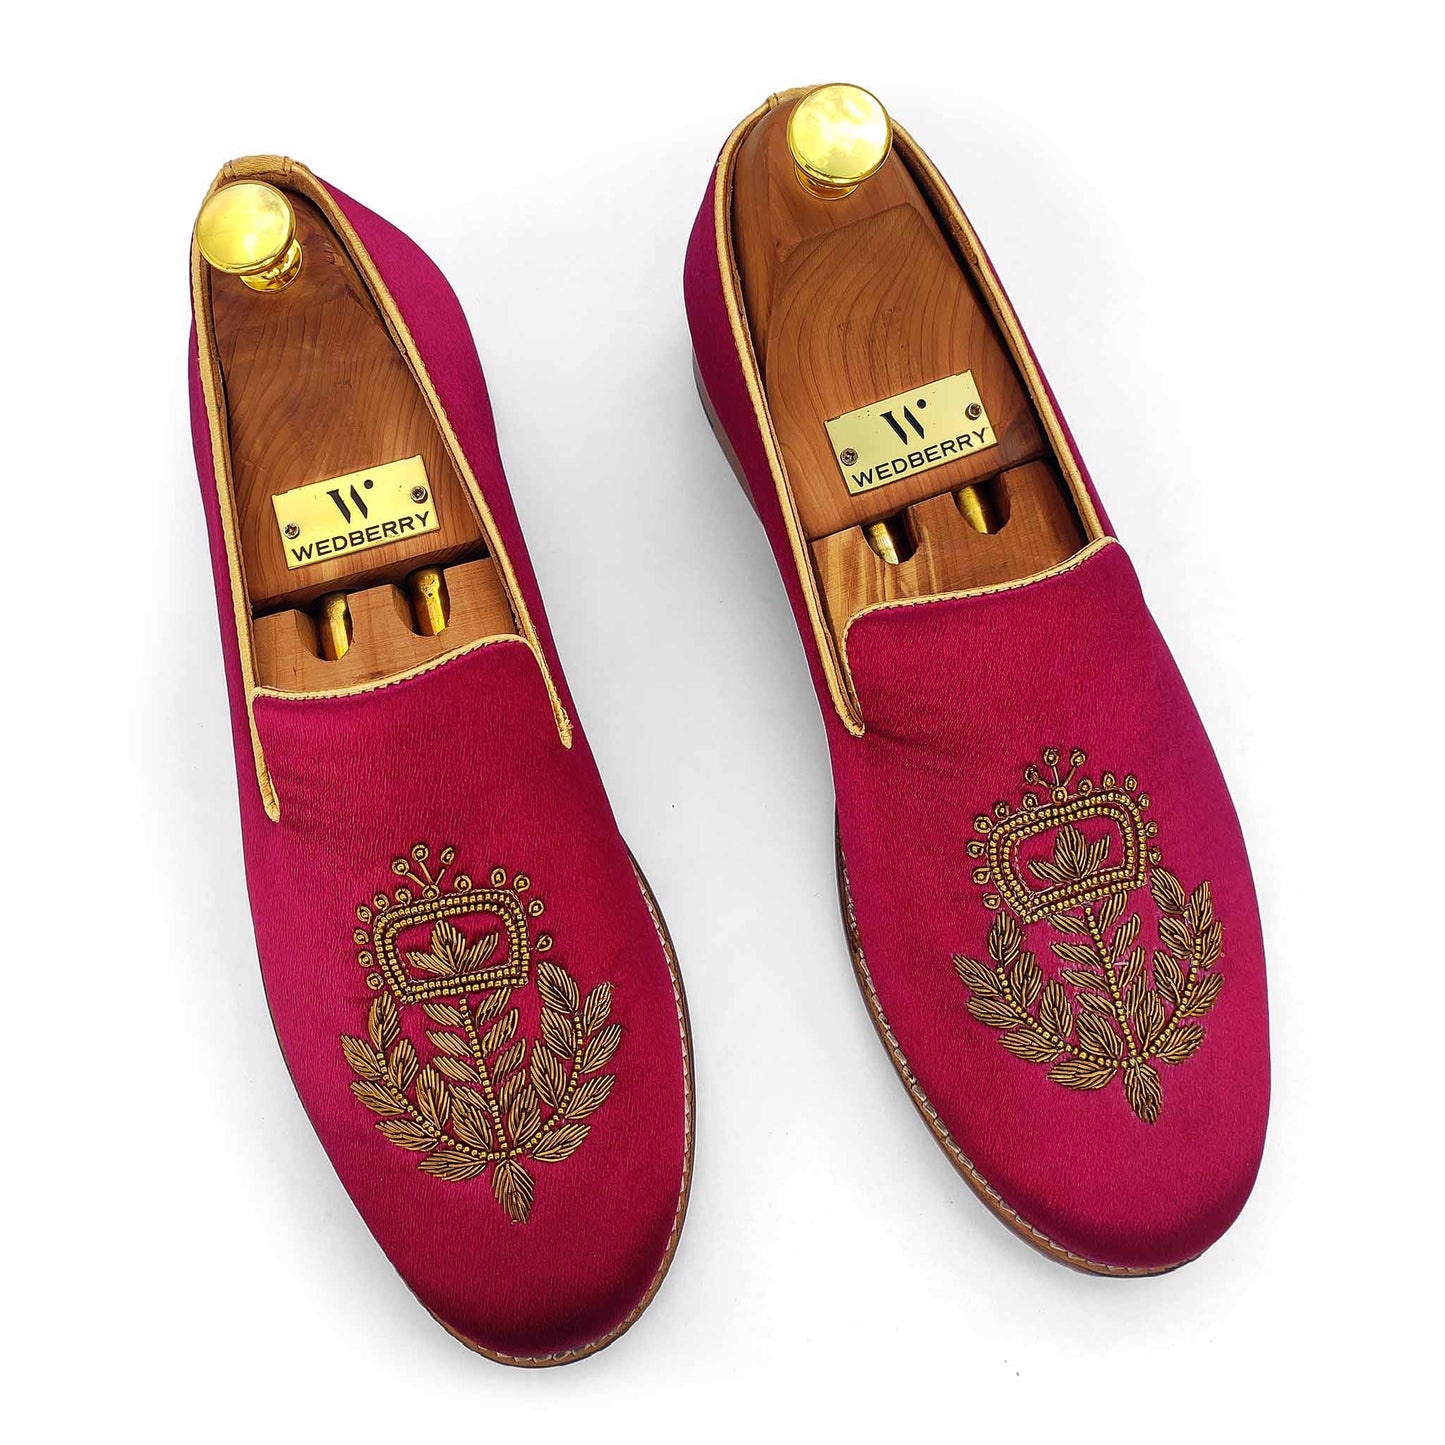 Maroon Antique Gold Zardozi Handwork Wedding Ethnic Shoes Loafers for Men